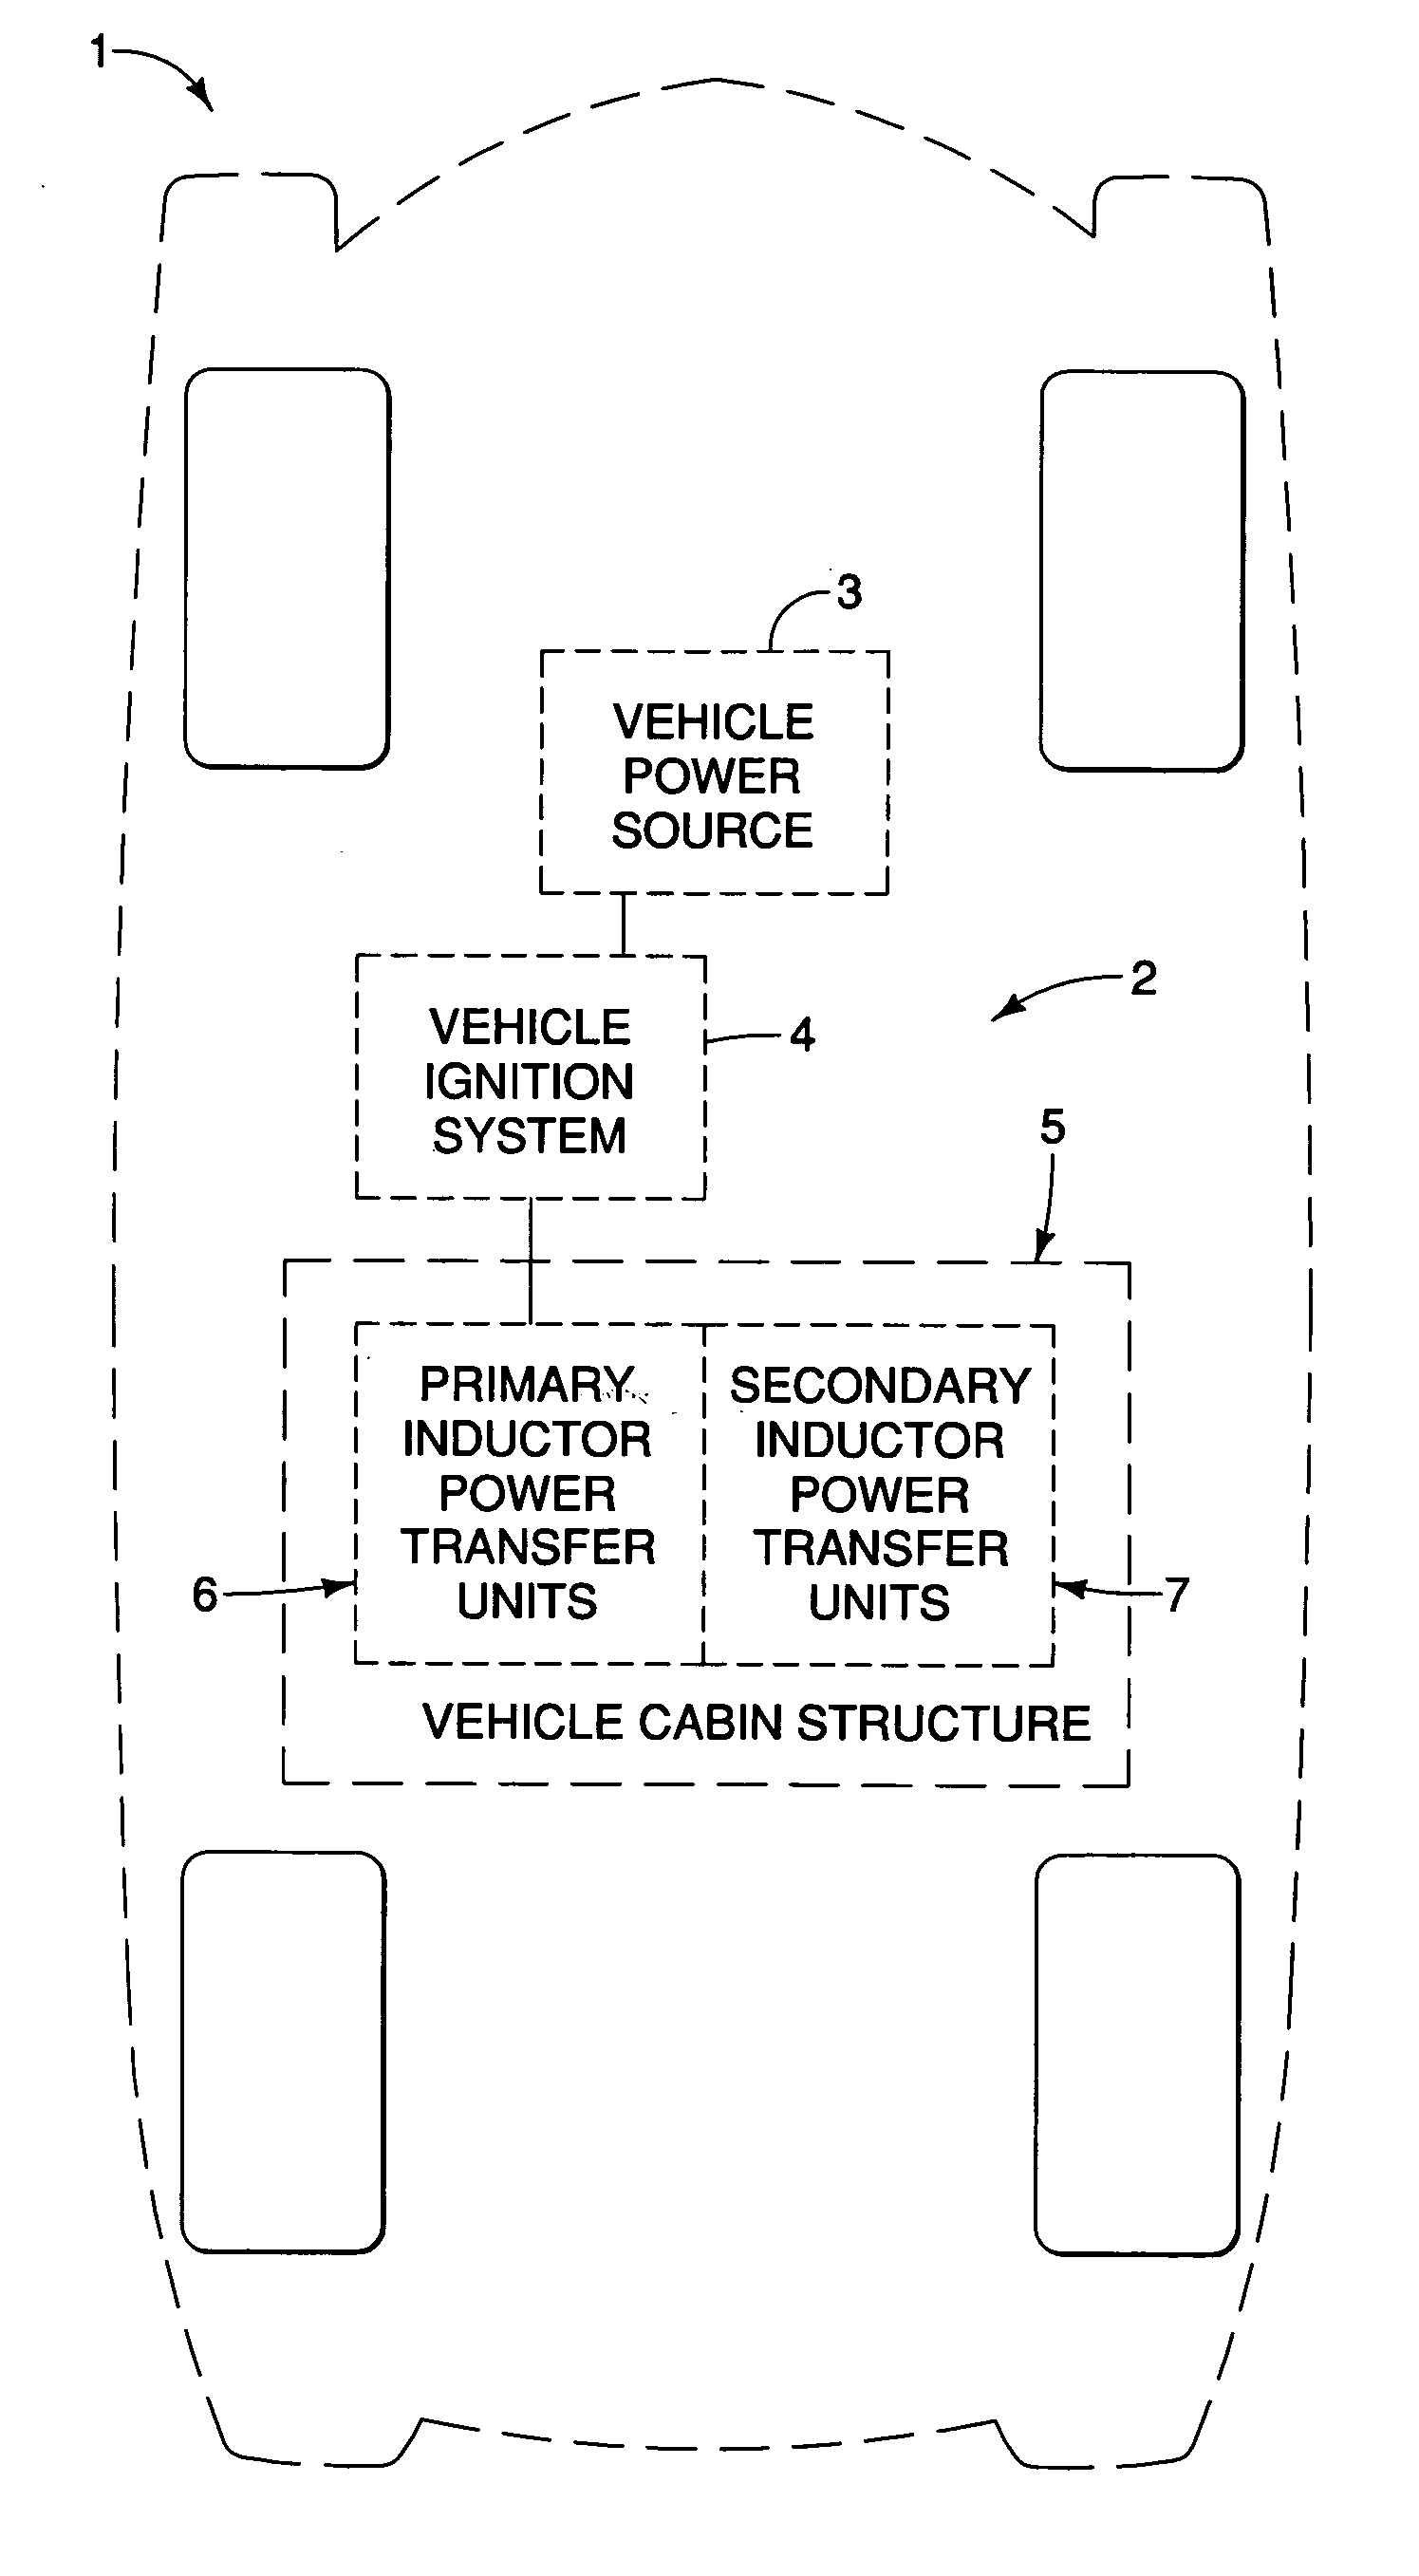 Vehicle cabin power transfer arrangement